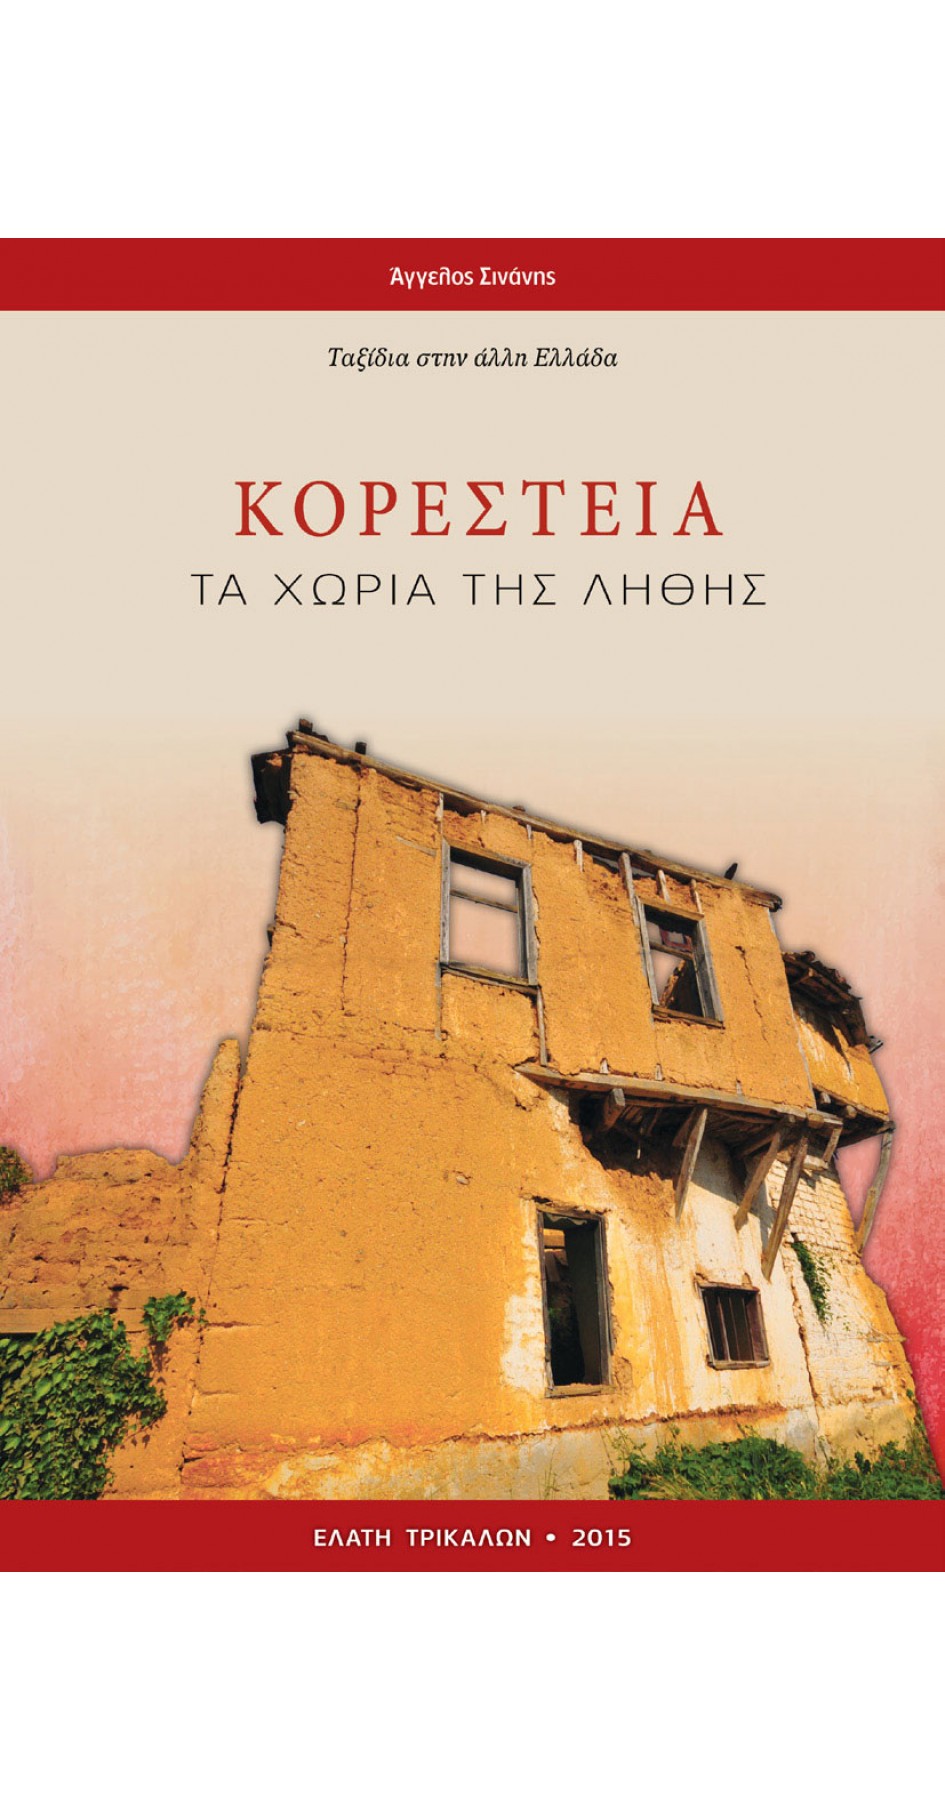 Korestia, ta choria tis lithis (book in Greek)